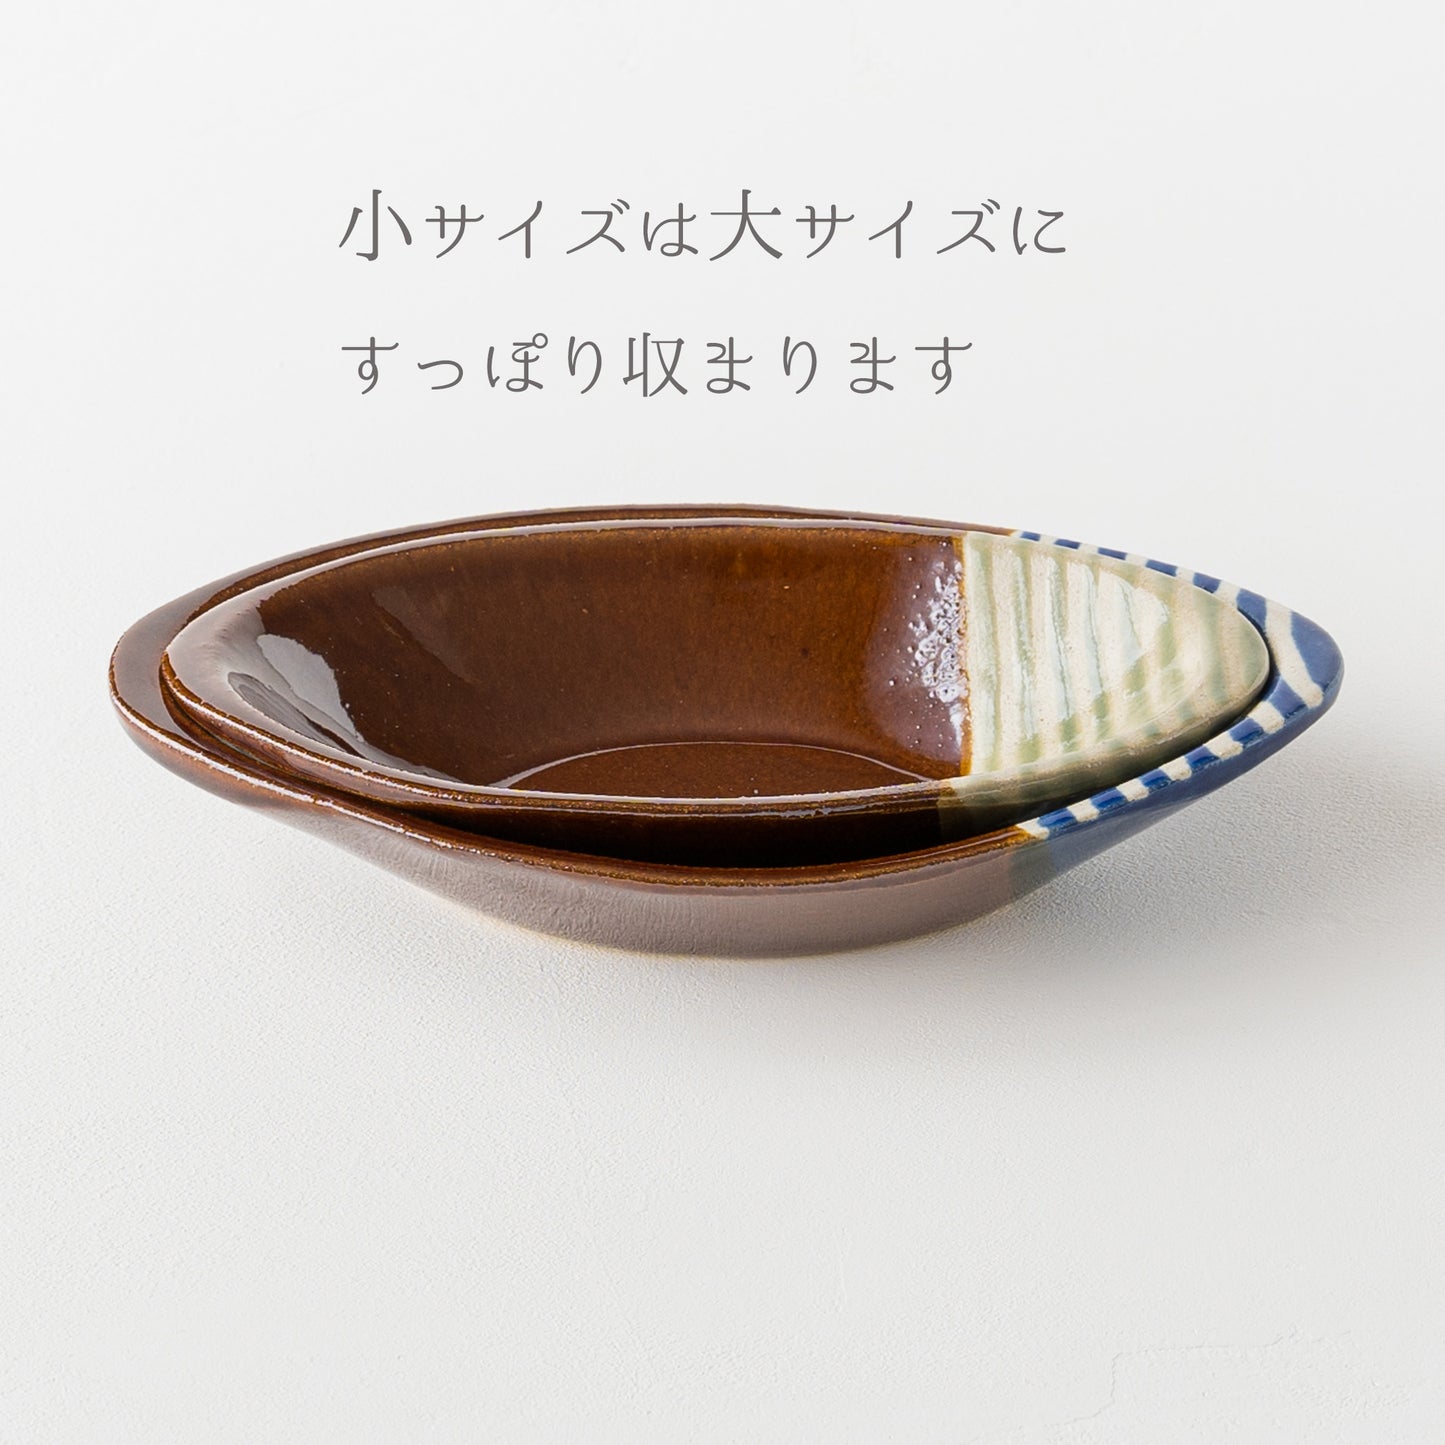 Curry plate large border pattern green x candy glaze｜Wakaba Enokida Enokida Kiln